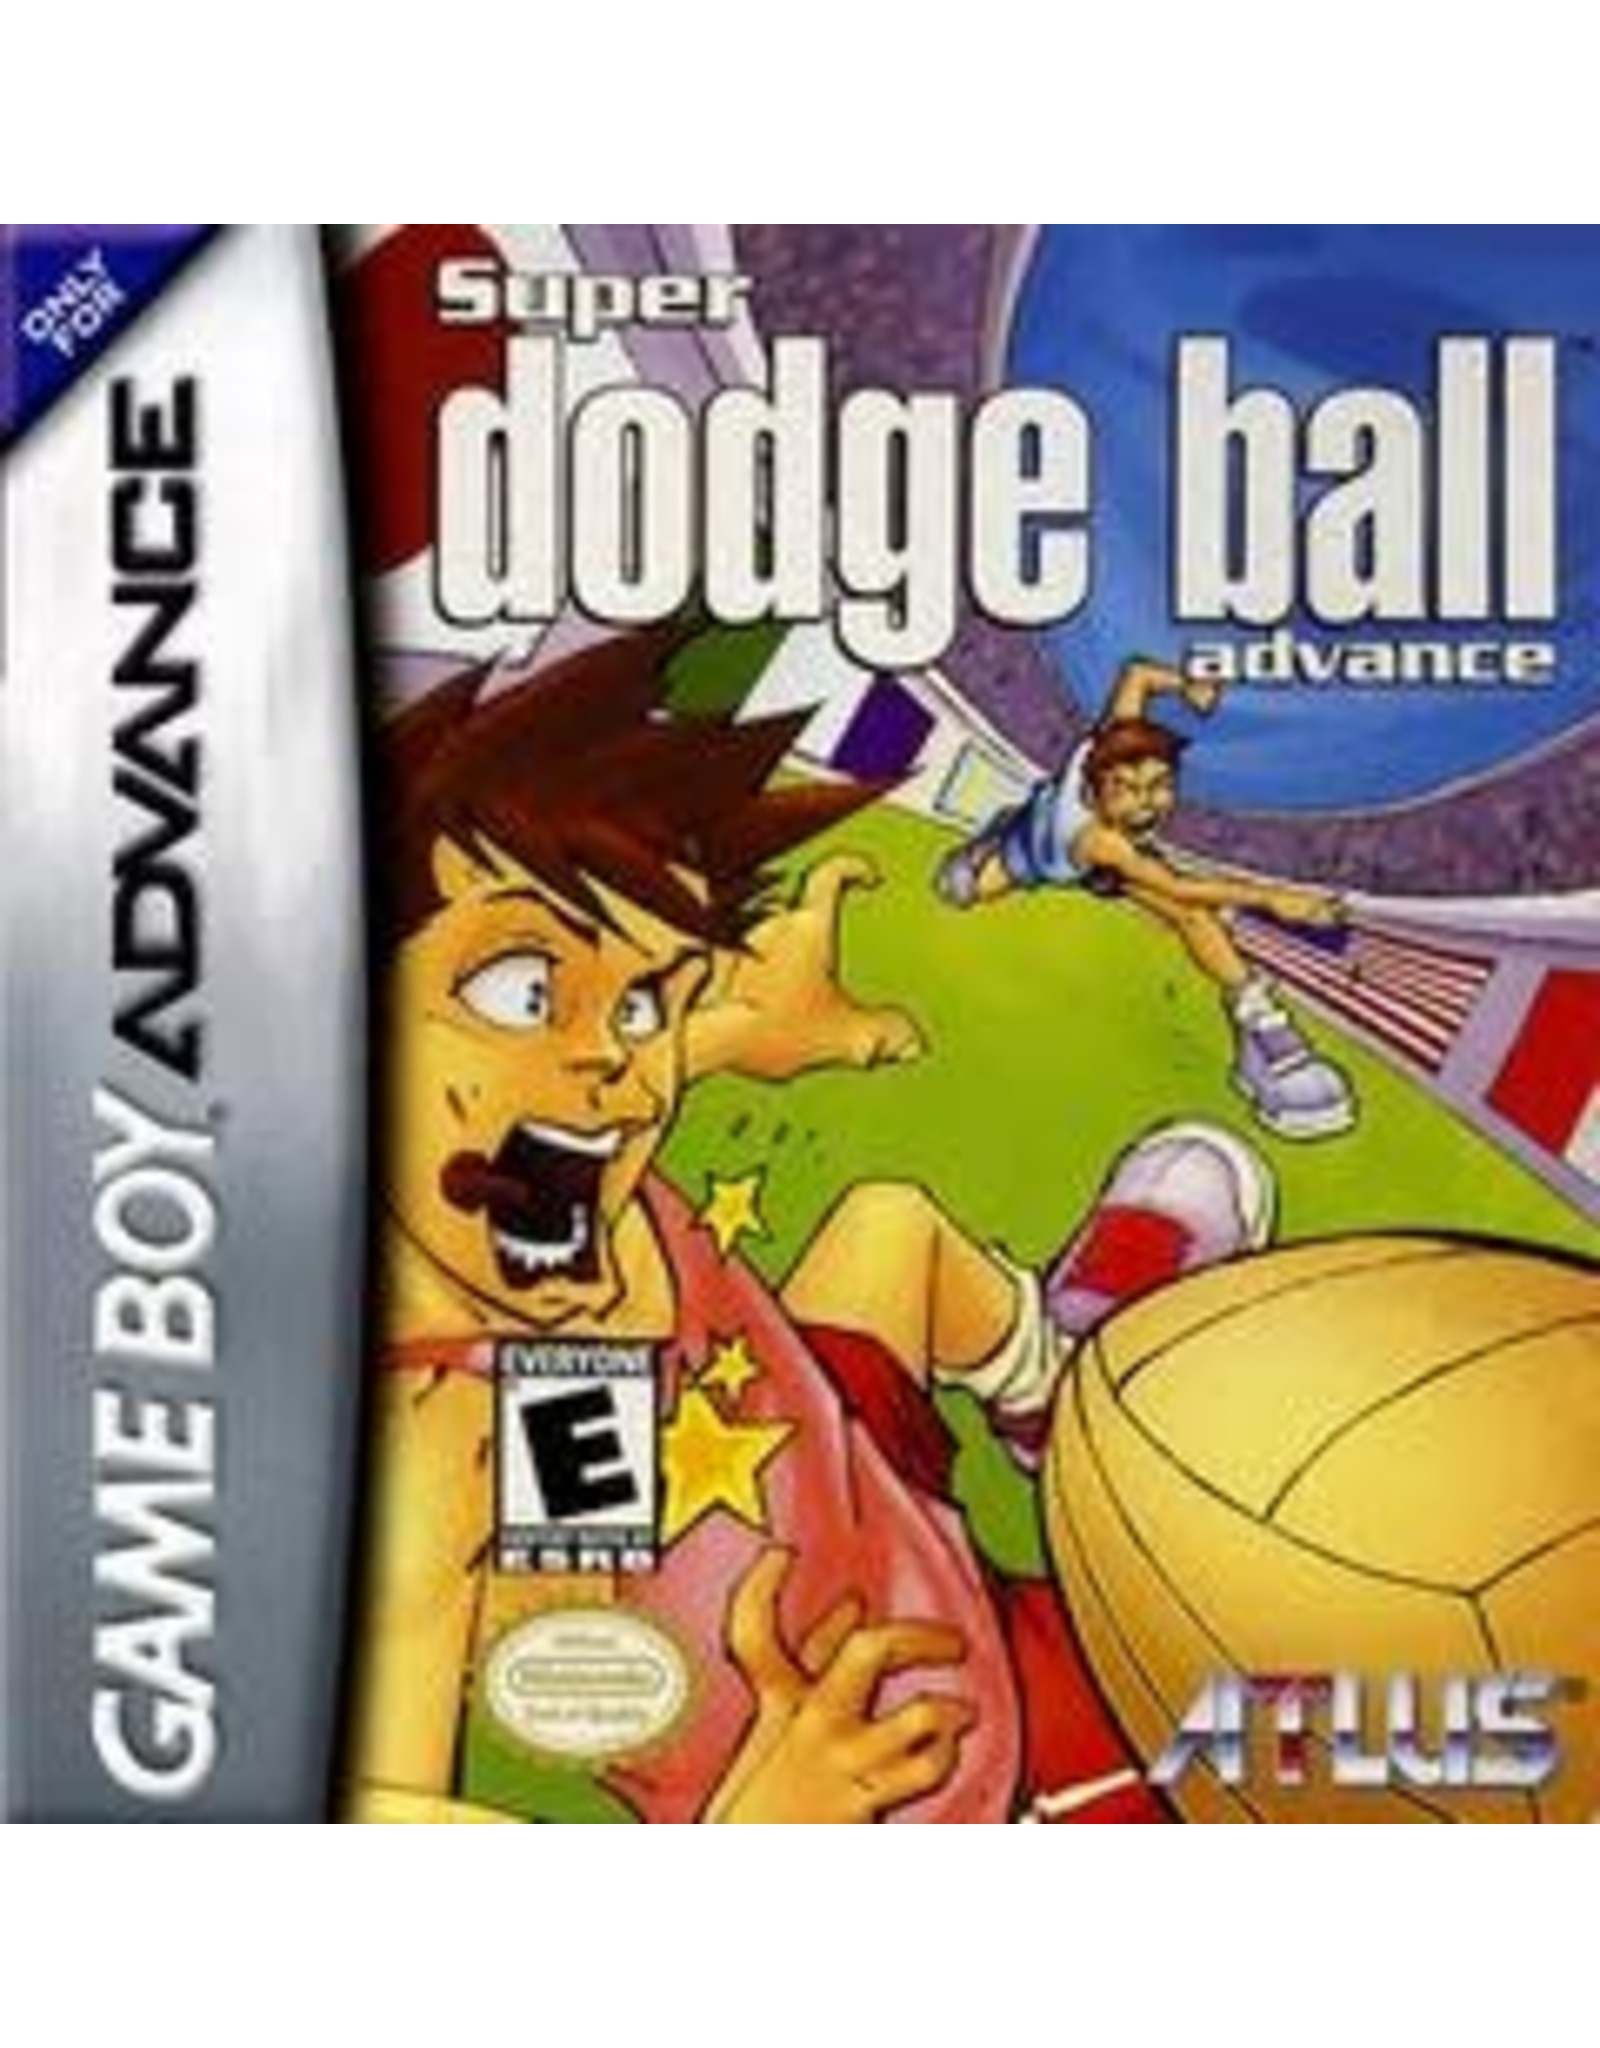 Game Boy Advance Super Dodge Ball Advance (Brand New, Factory Sealed)